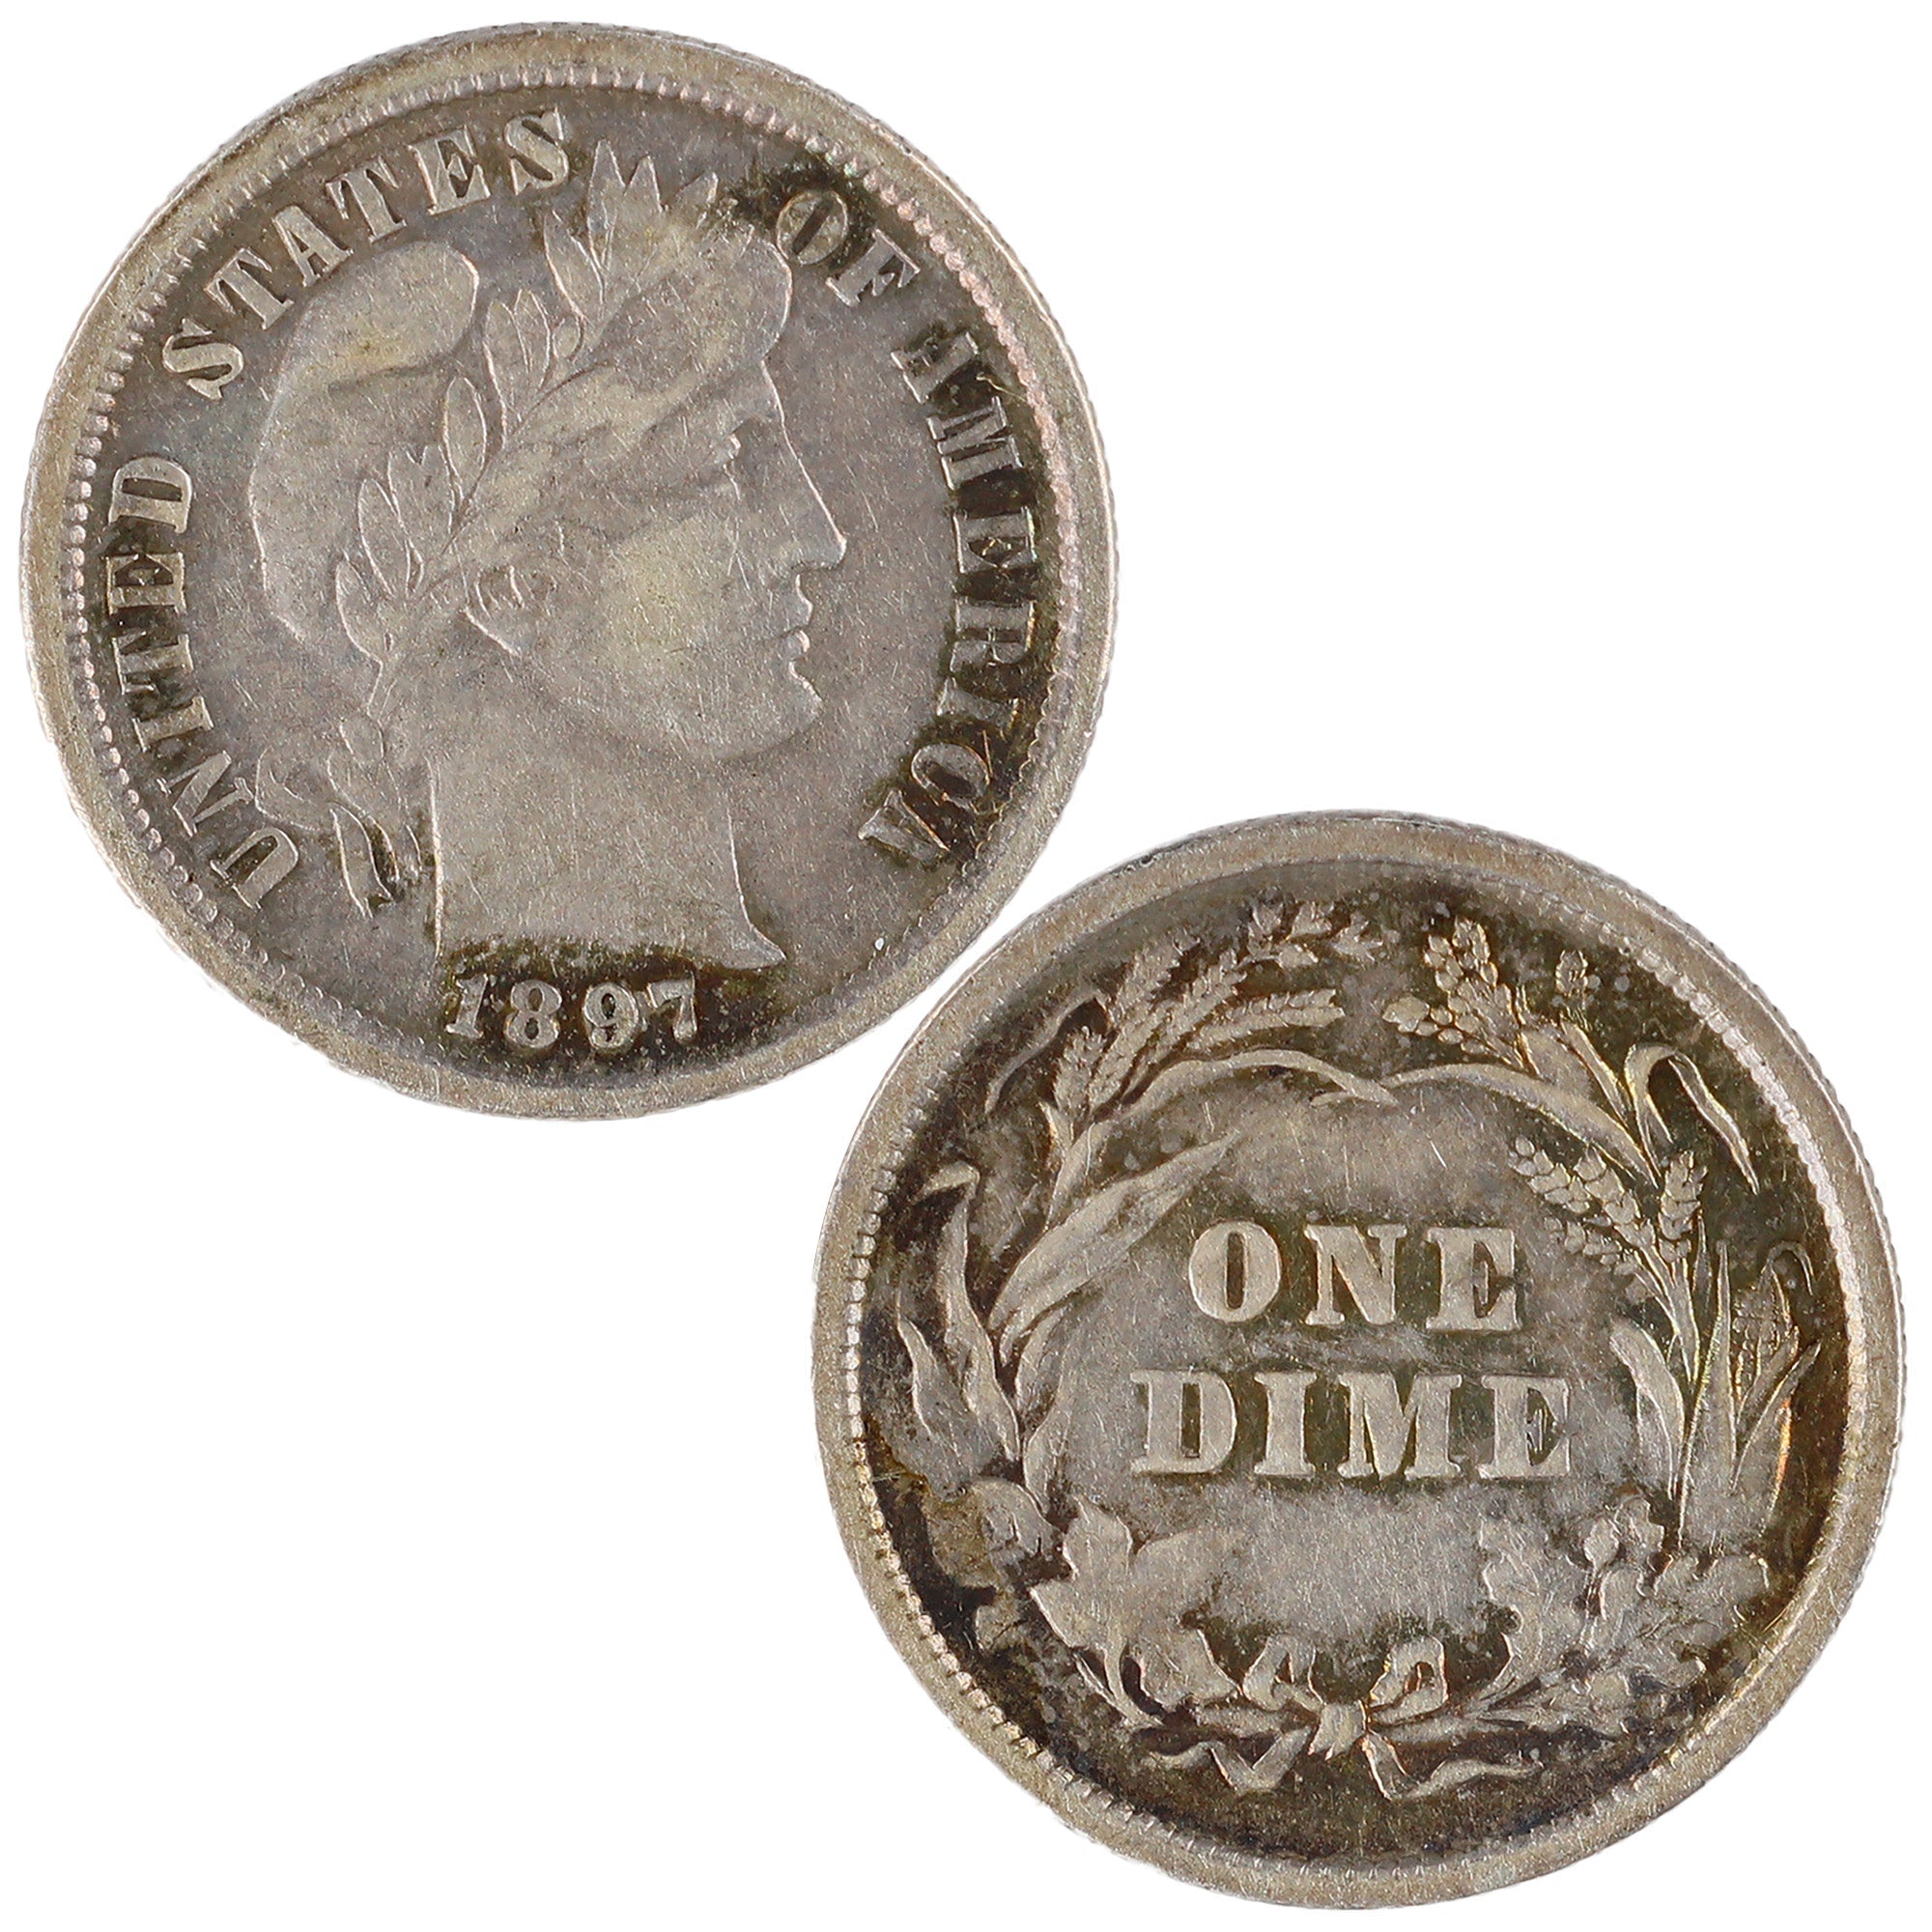 1897 Barber Dime VF Very Fine Details Silver 10c Coin SKU:I11975